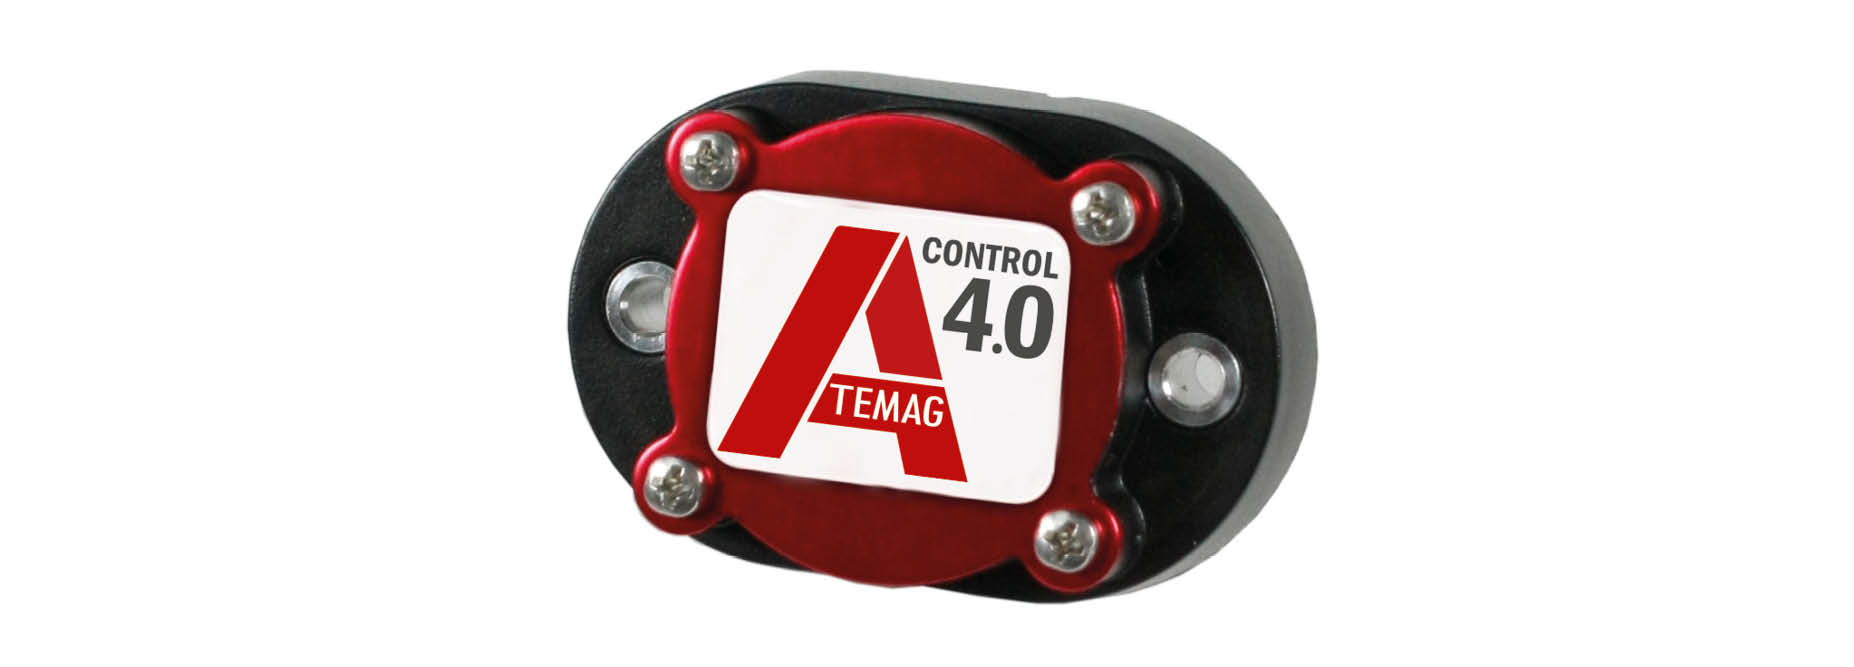 ATEMAG CONTROL 4.0